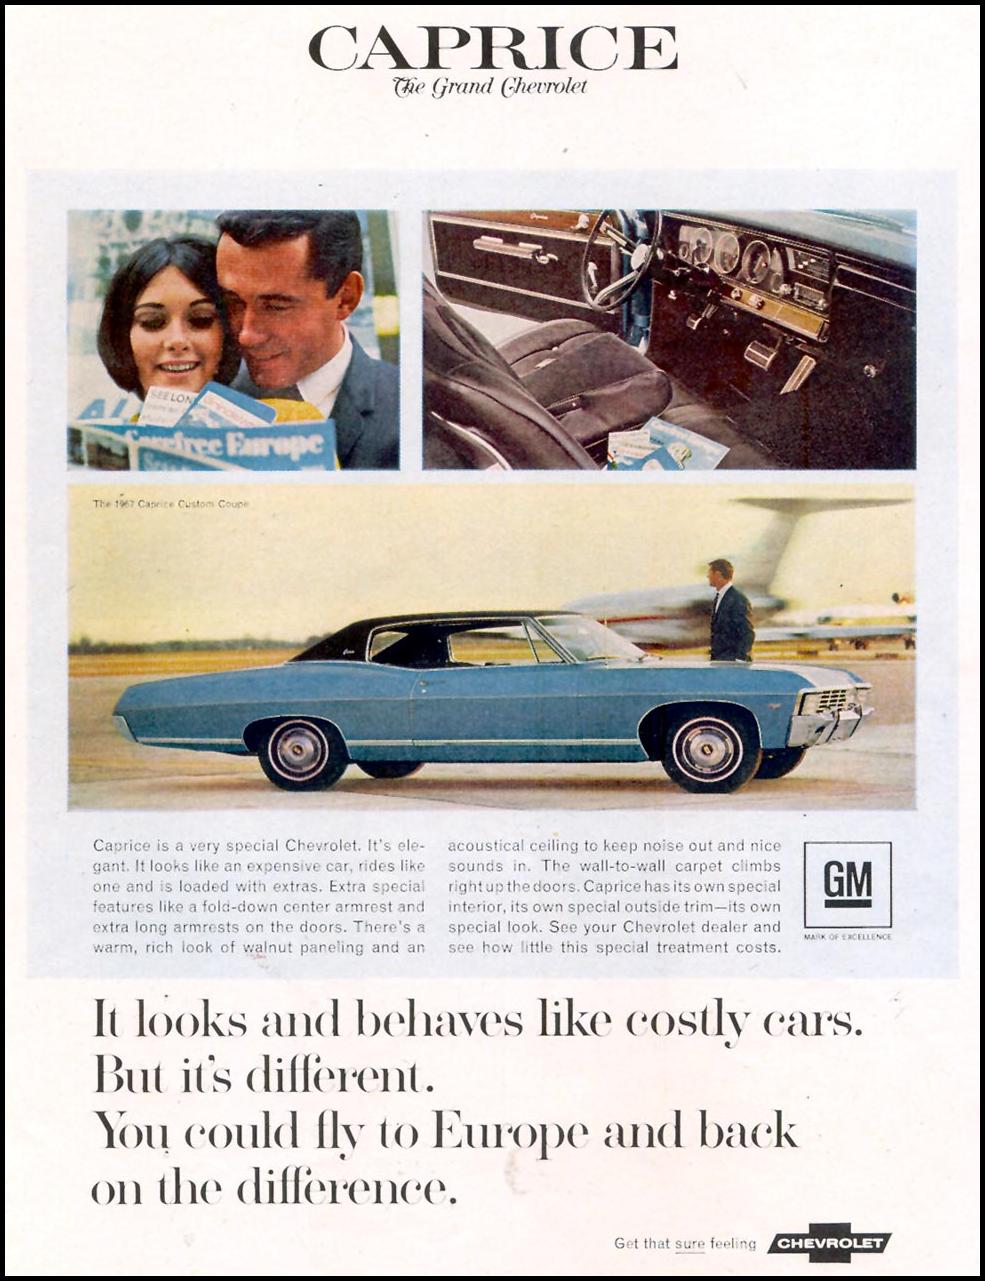 CHEVROLET AUTOMOBILES
TIME
04/21/1967
p. 48